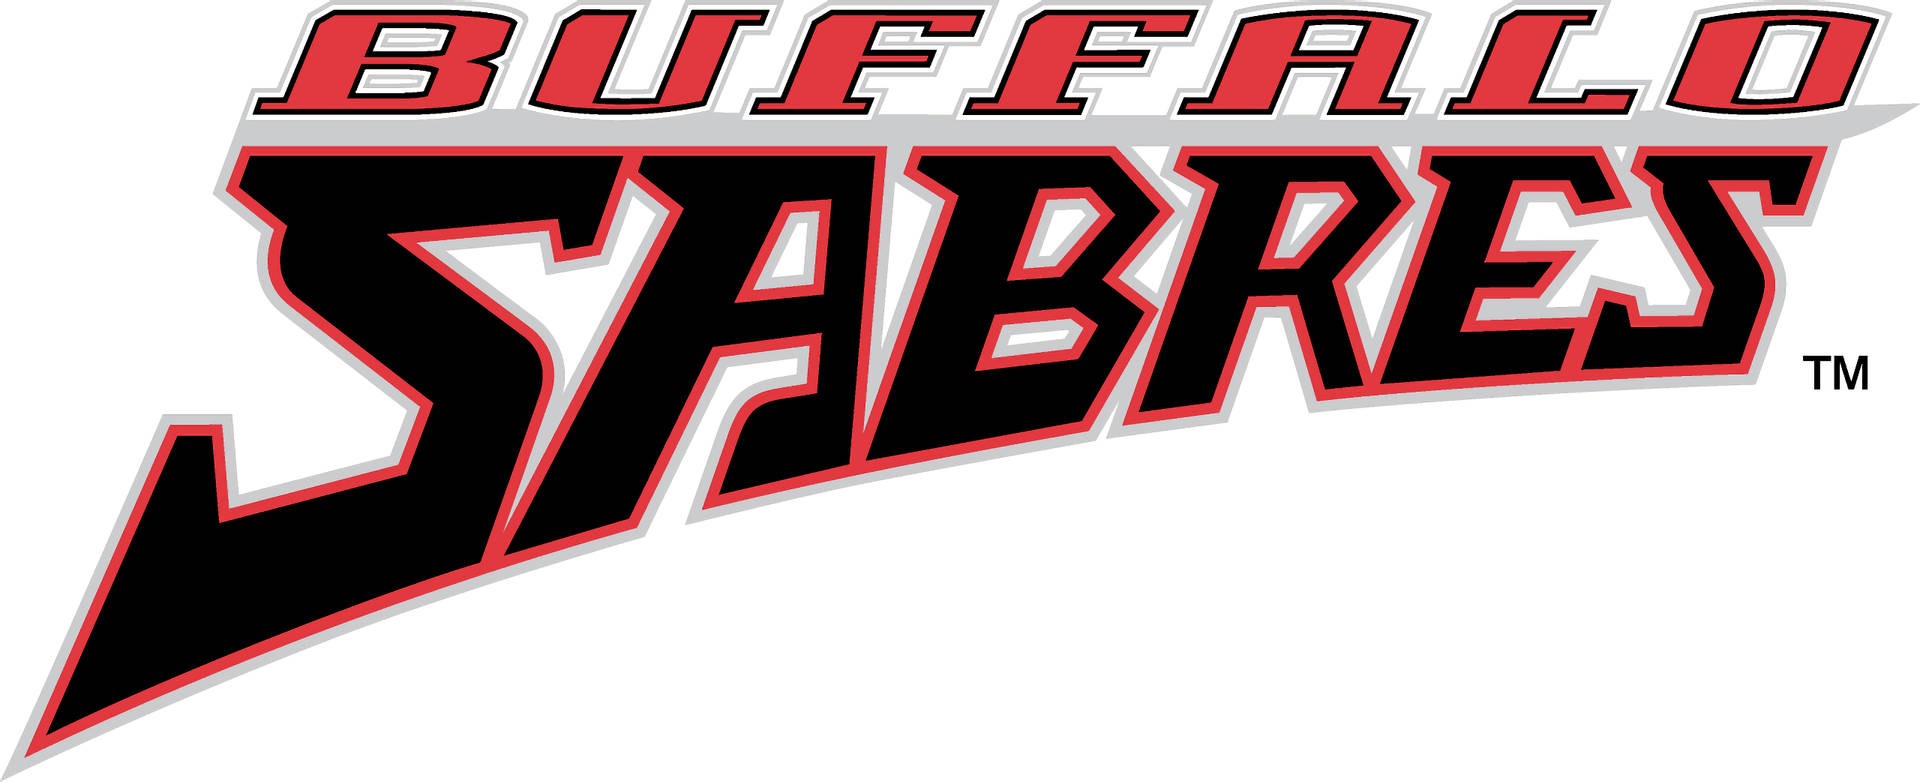 Buffalo Sabres Name Background